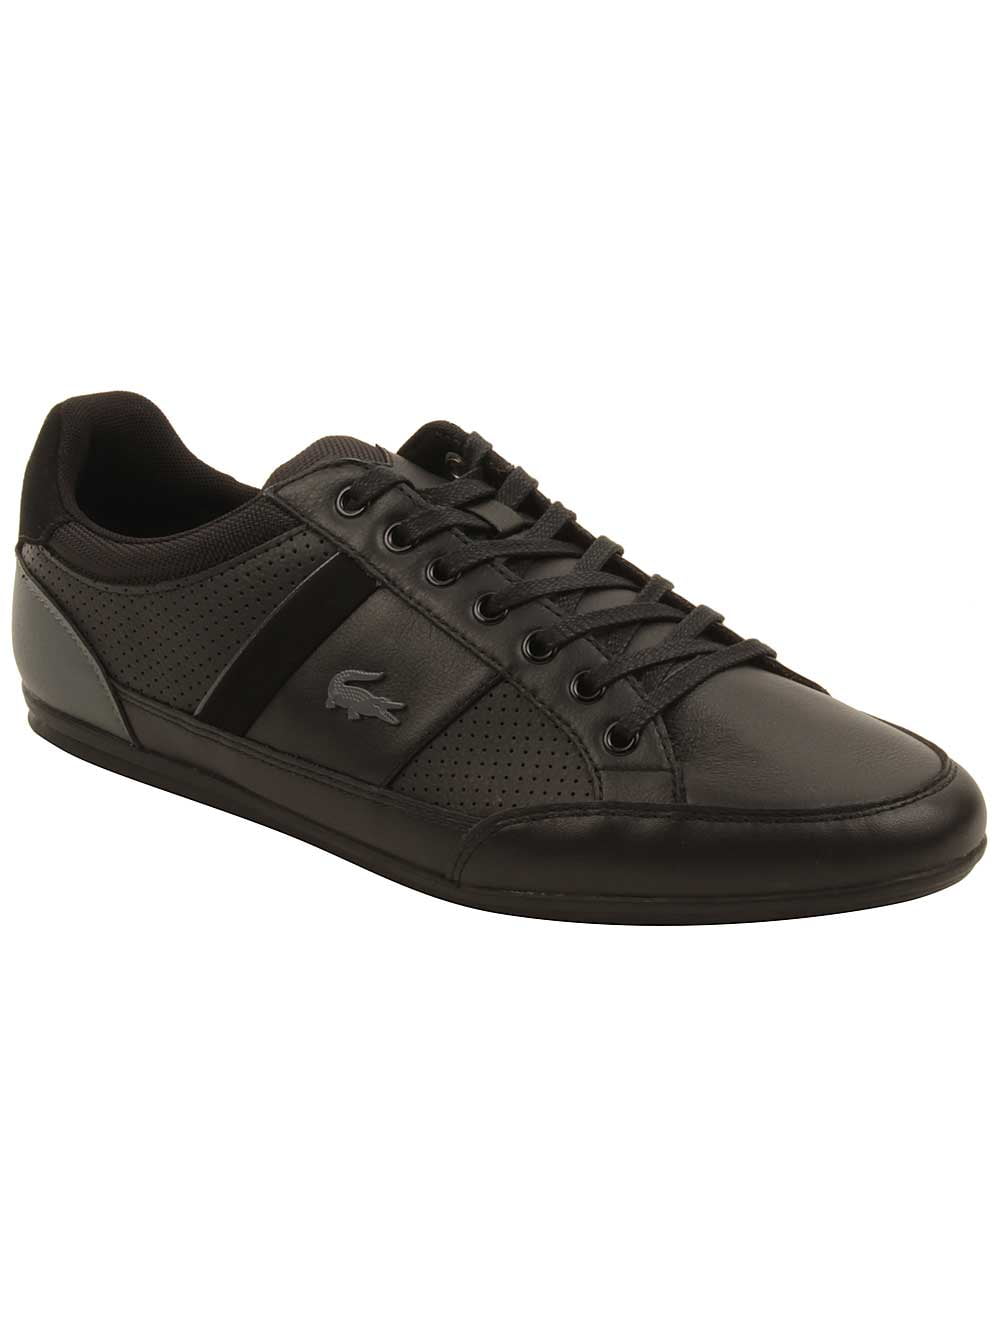 Lacoste Mens Chaymon 316 Sneakers in Black/Dark Grey Walmart.com